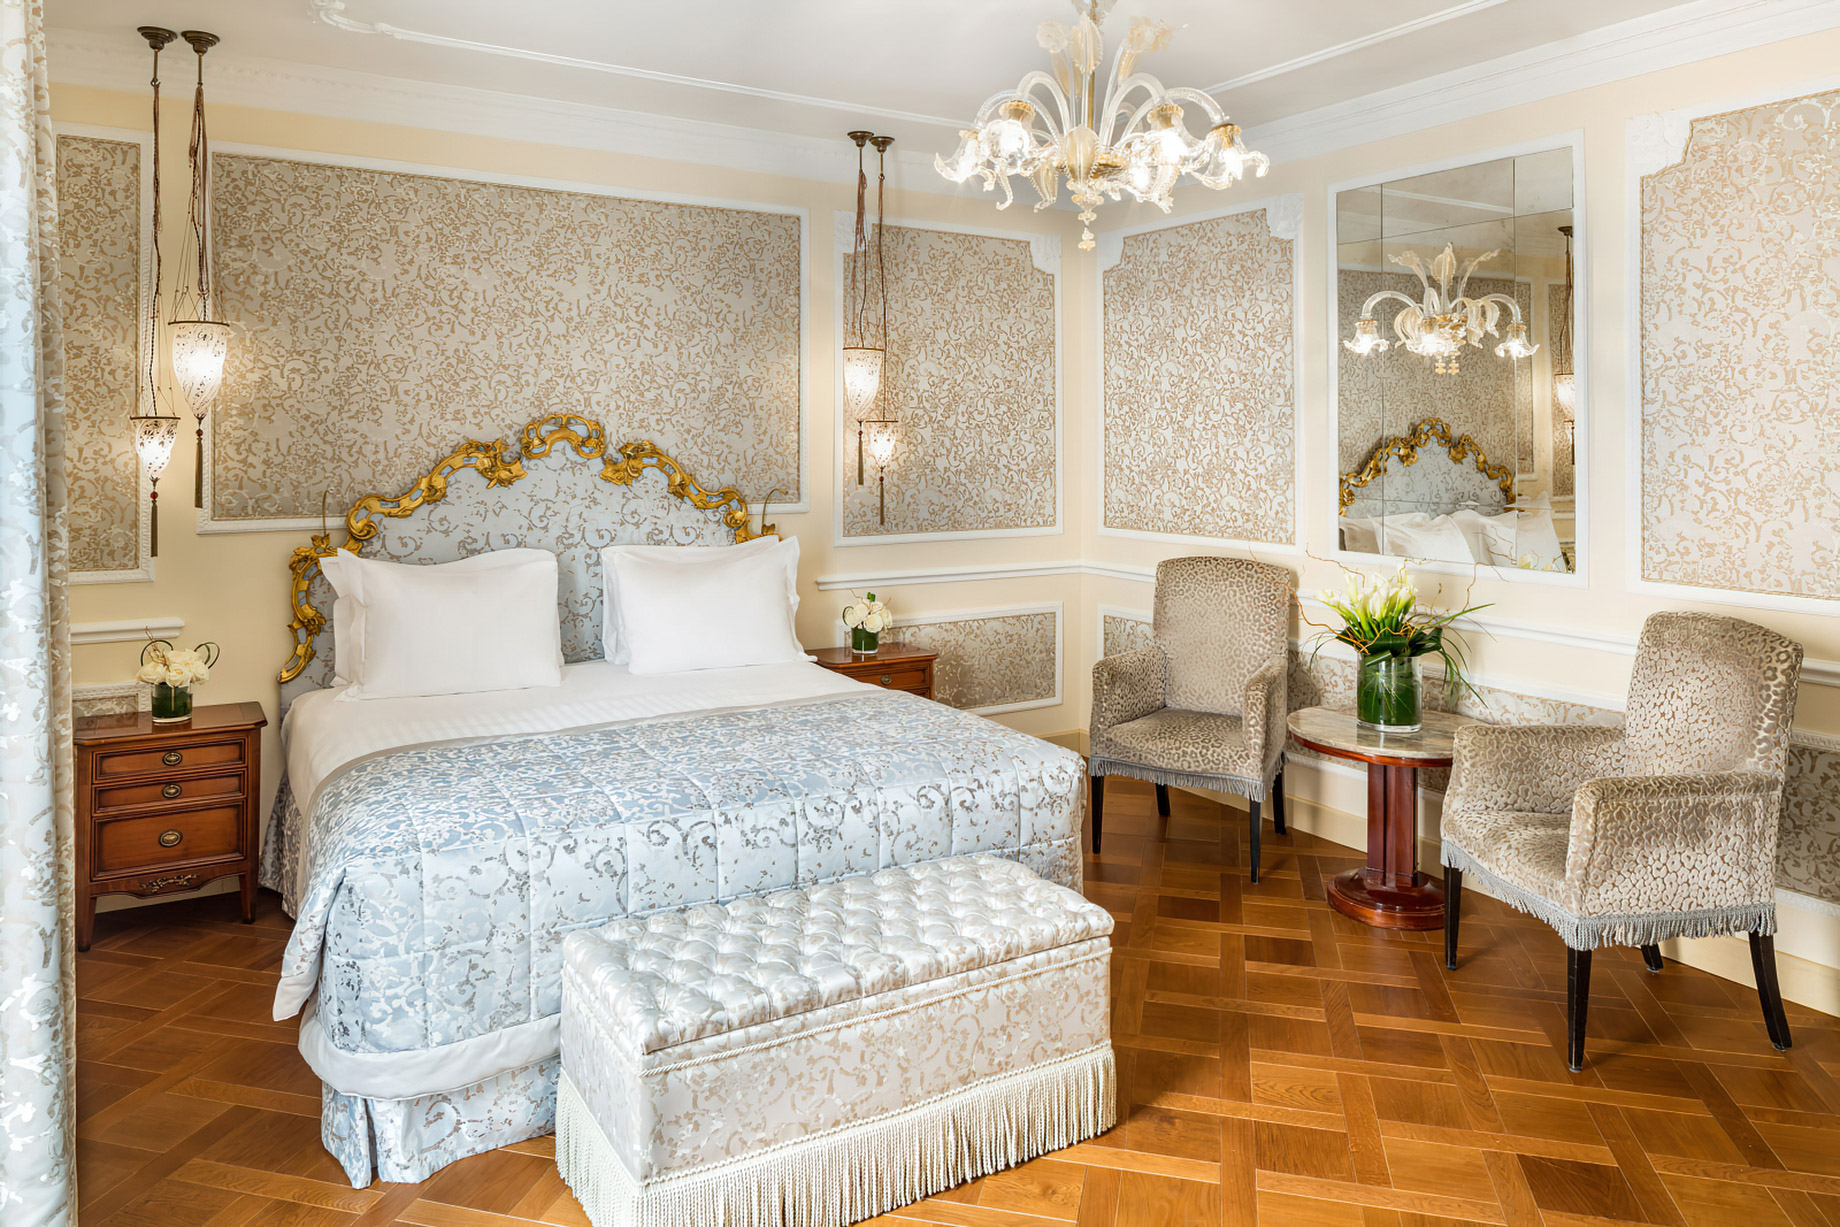 Baglioni Hotel Luna, Venezia – Venice, Italy – 2 Bedroom Family Junior Suite Bedroom